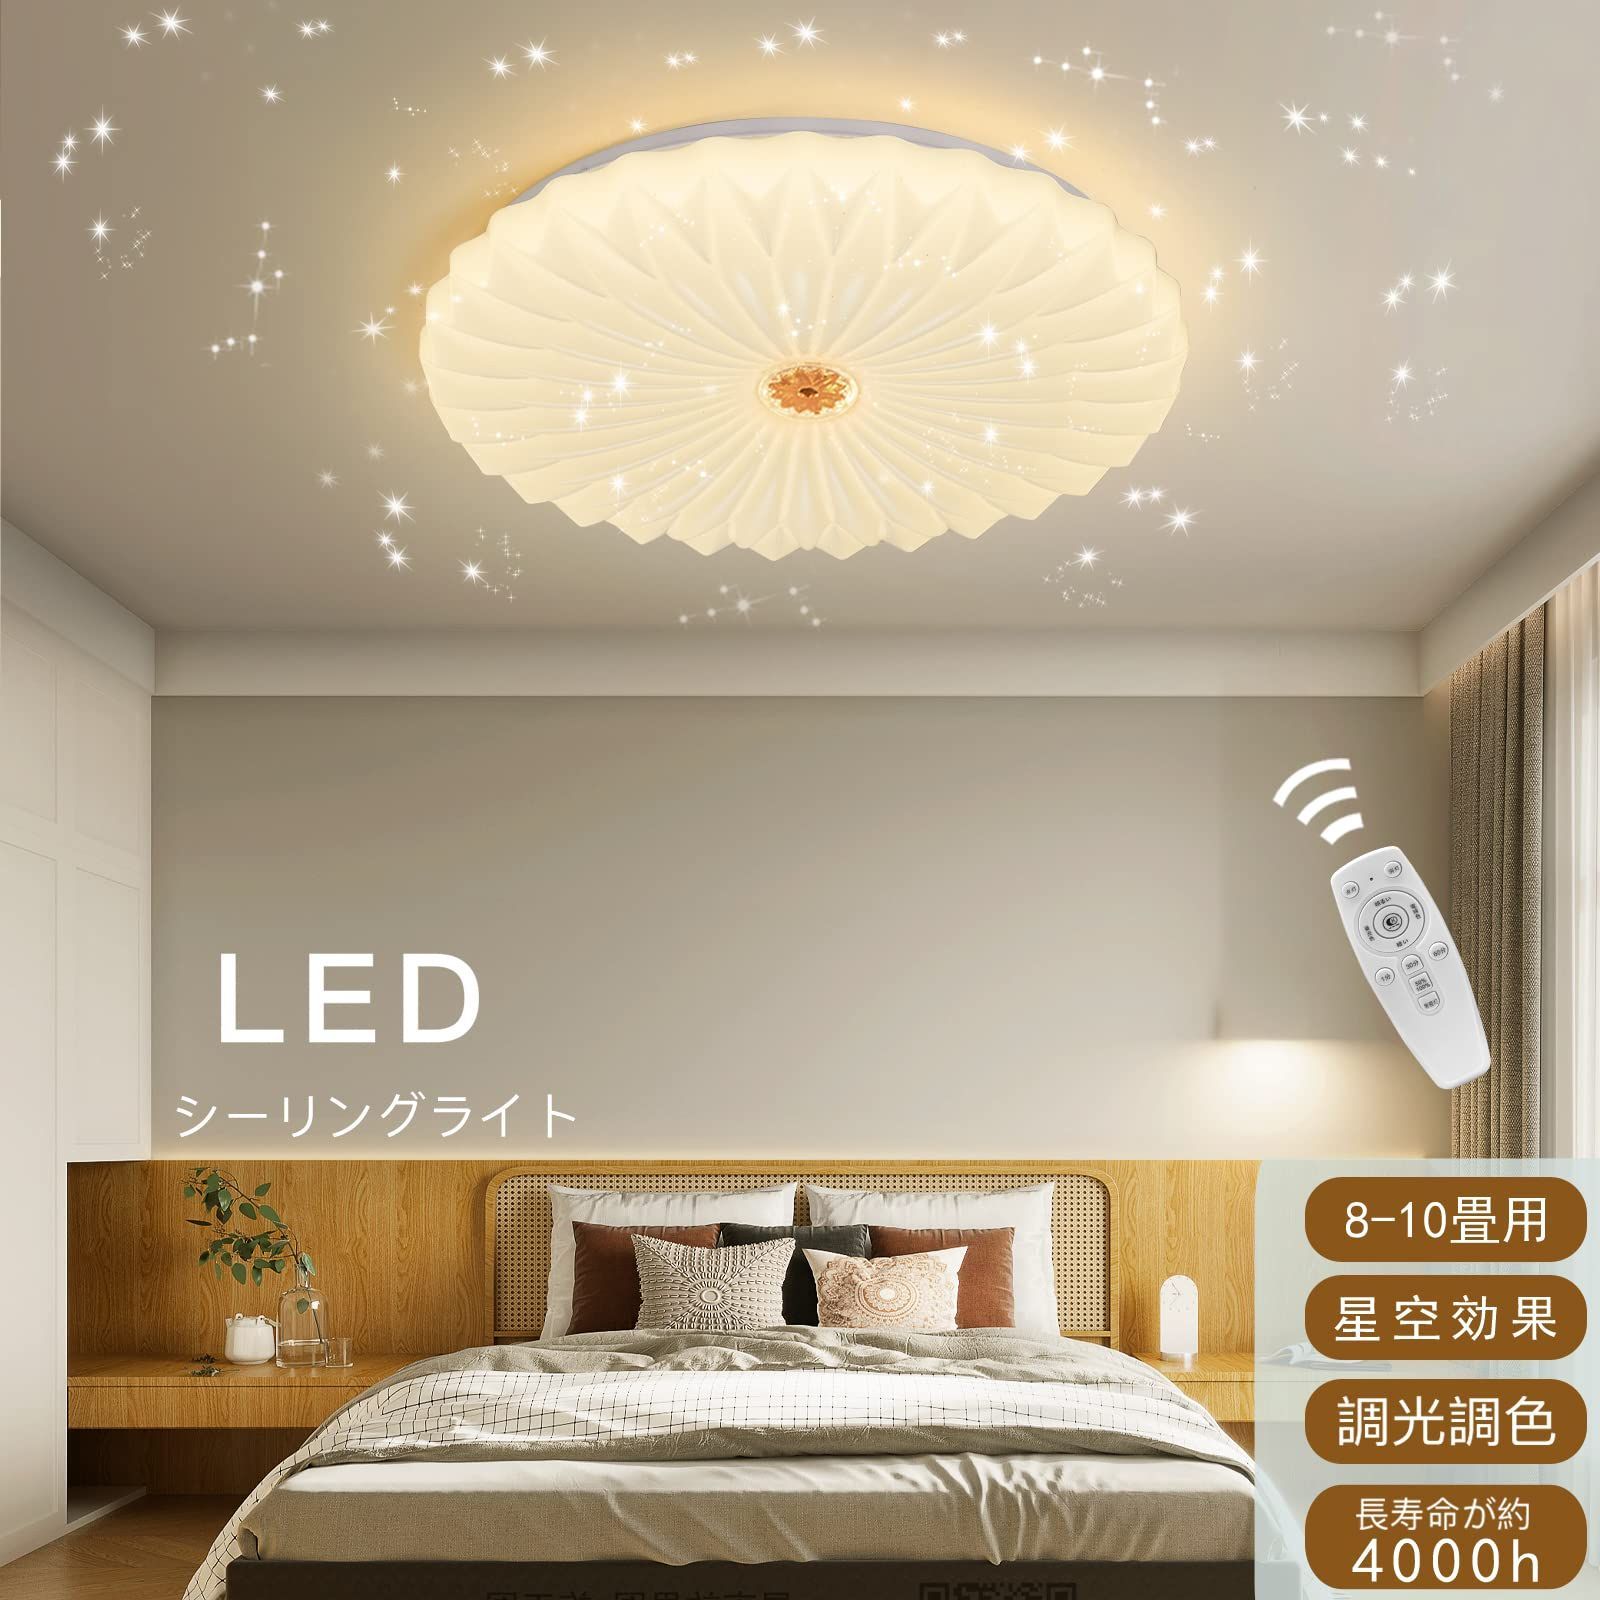 LED シーリングライト 星空効果8畳-10畳 調光 調色 天井照明器具